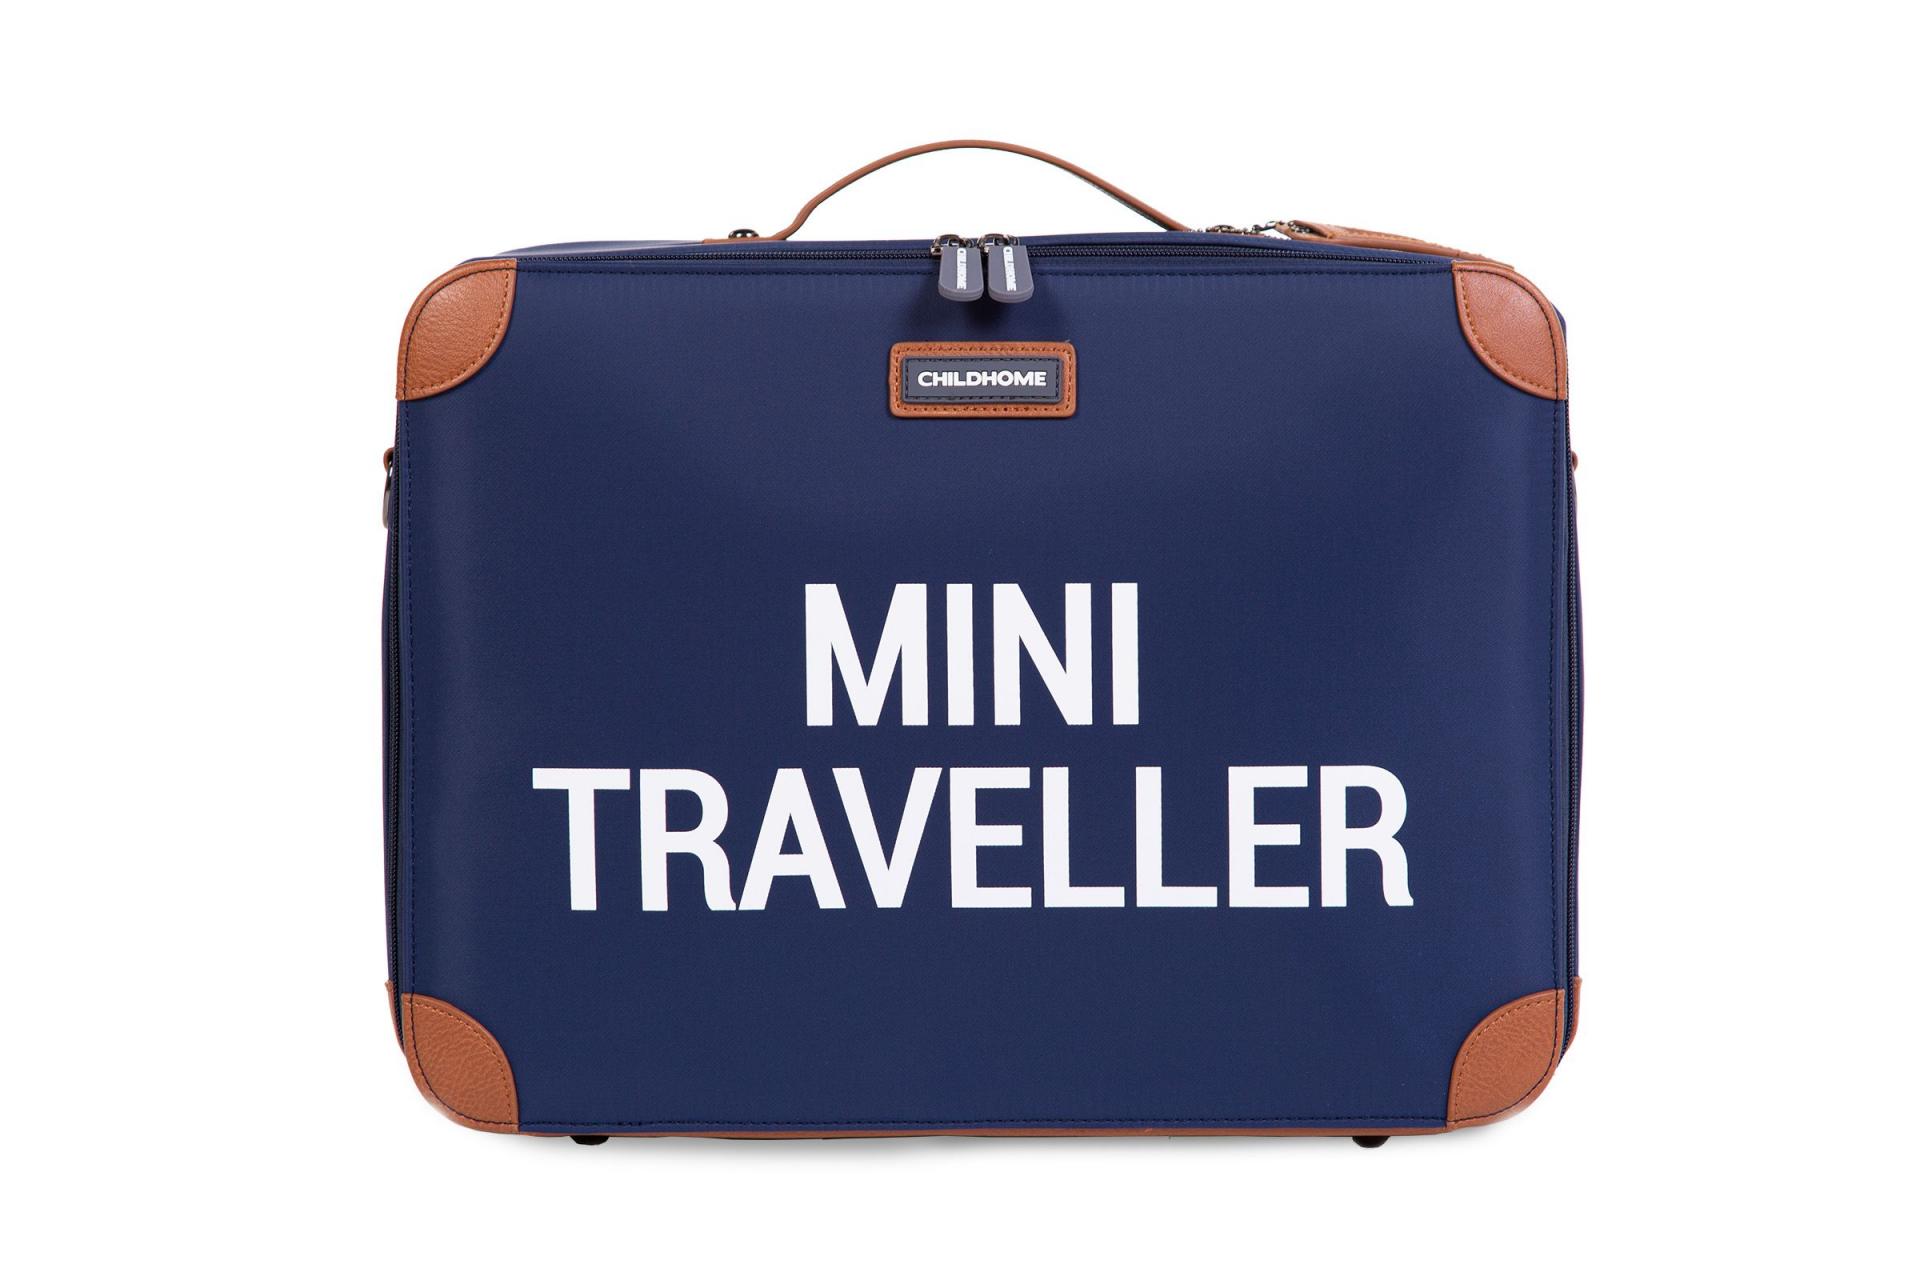 Mini traveller maleta azul marino